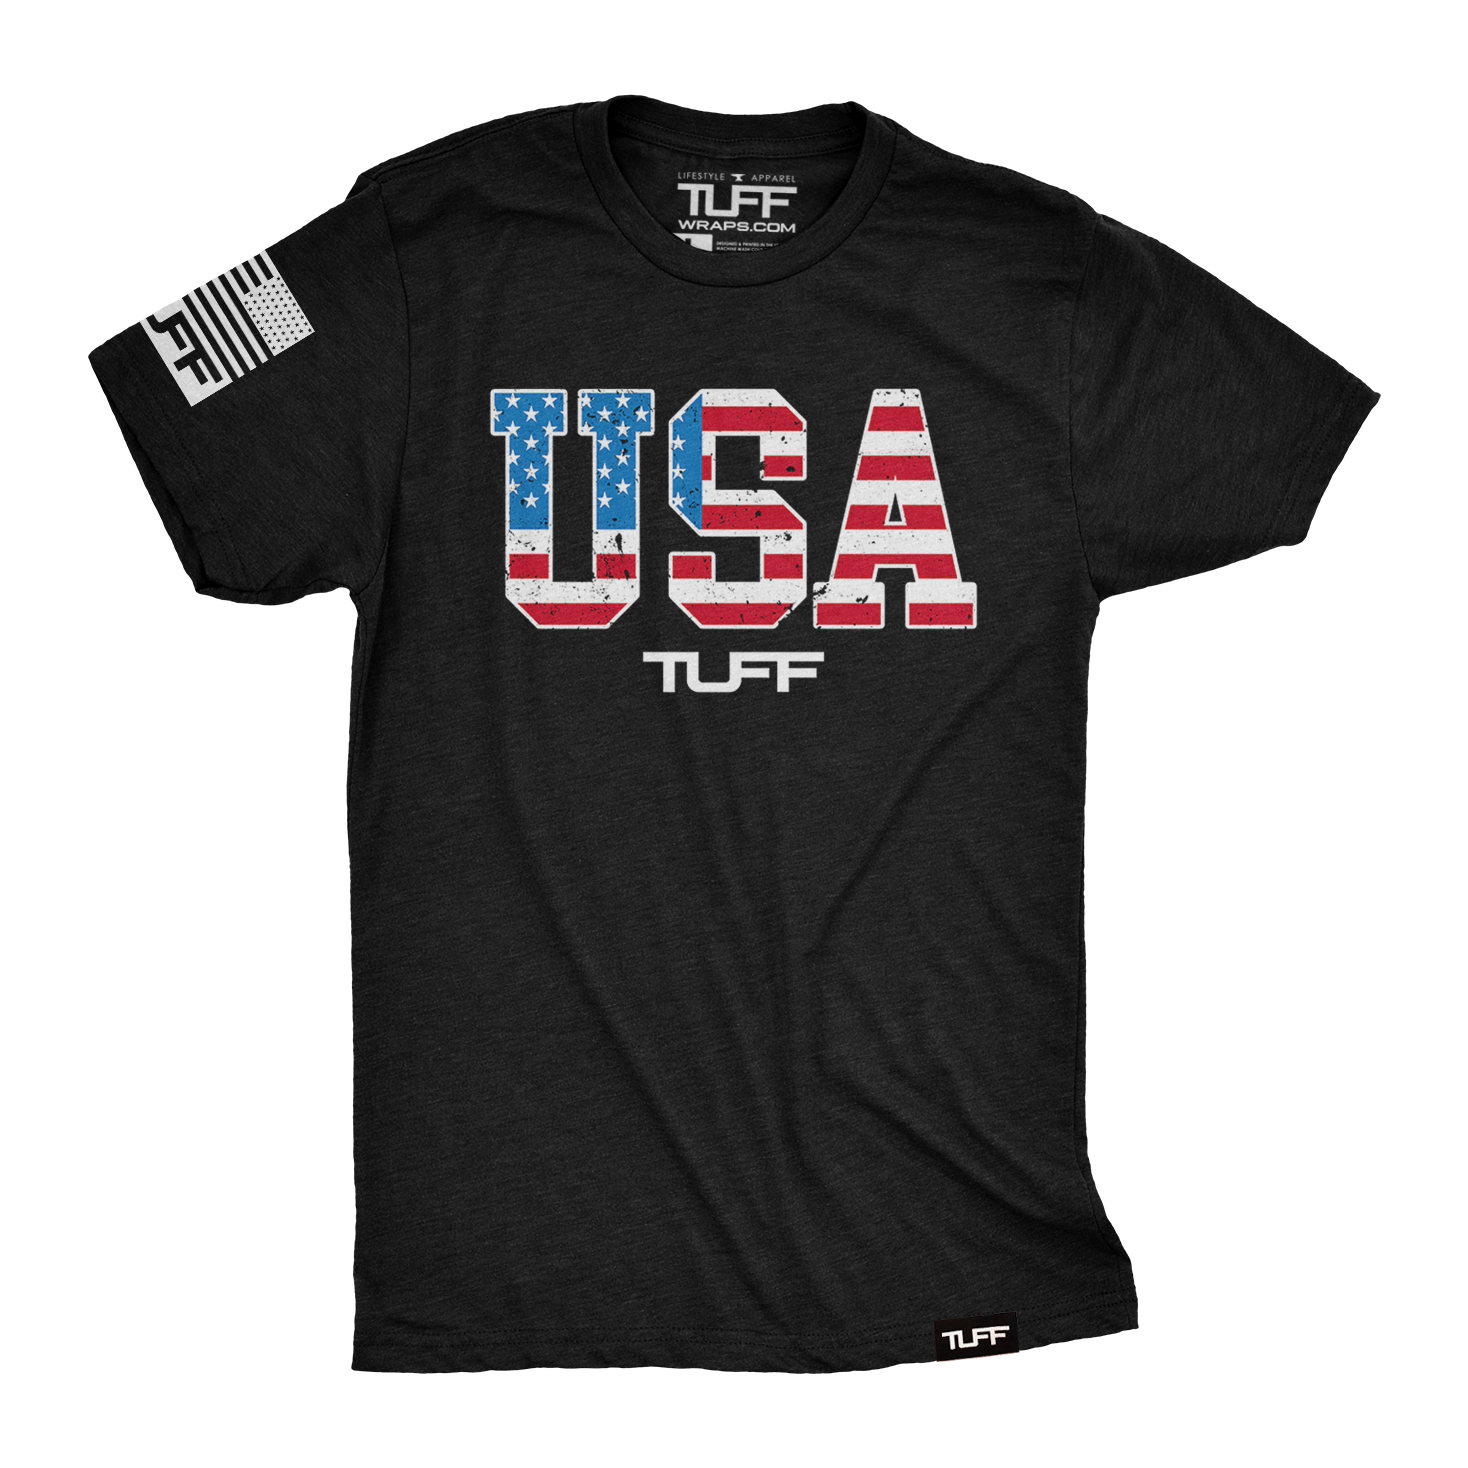 USA TUFF Tee T-shirt